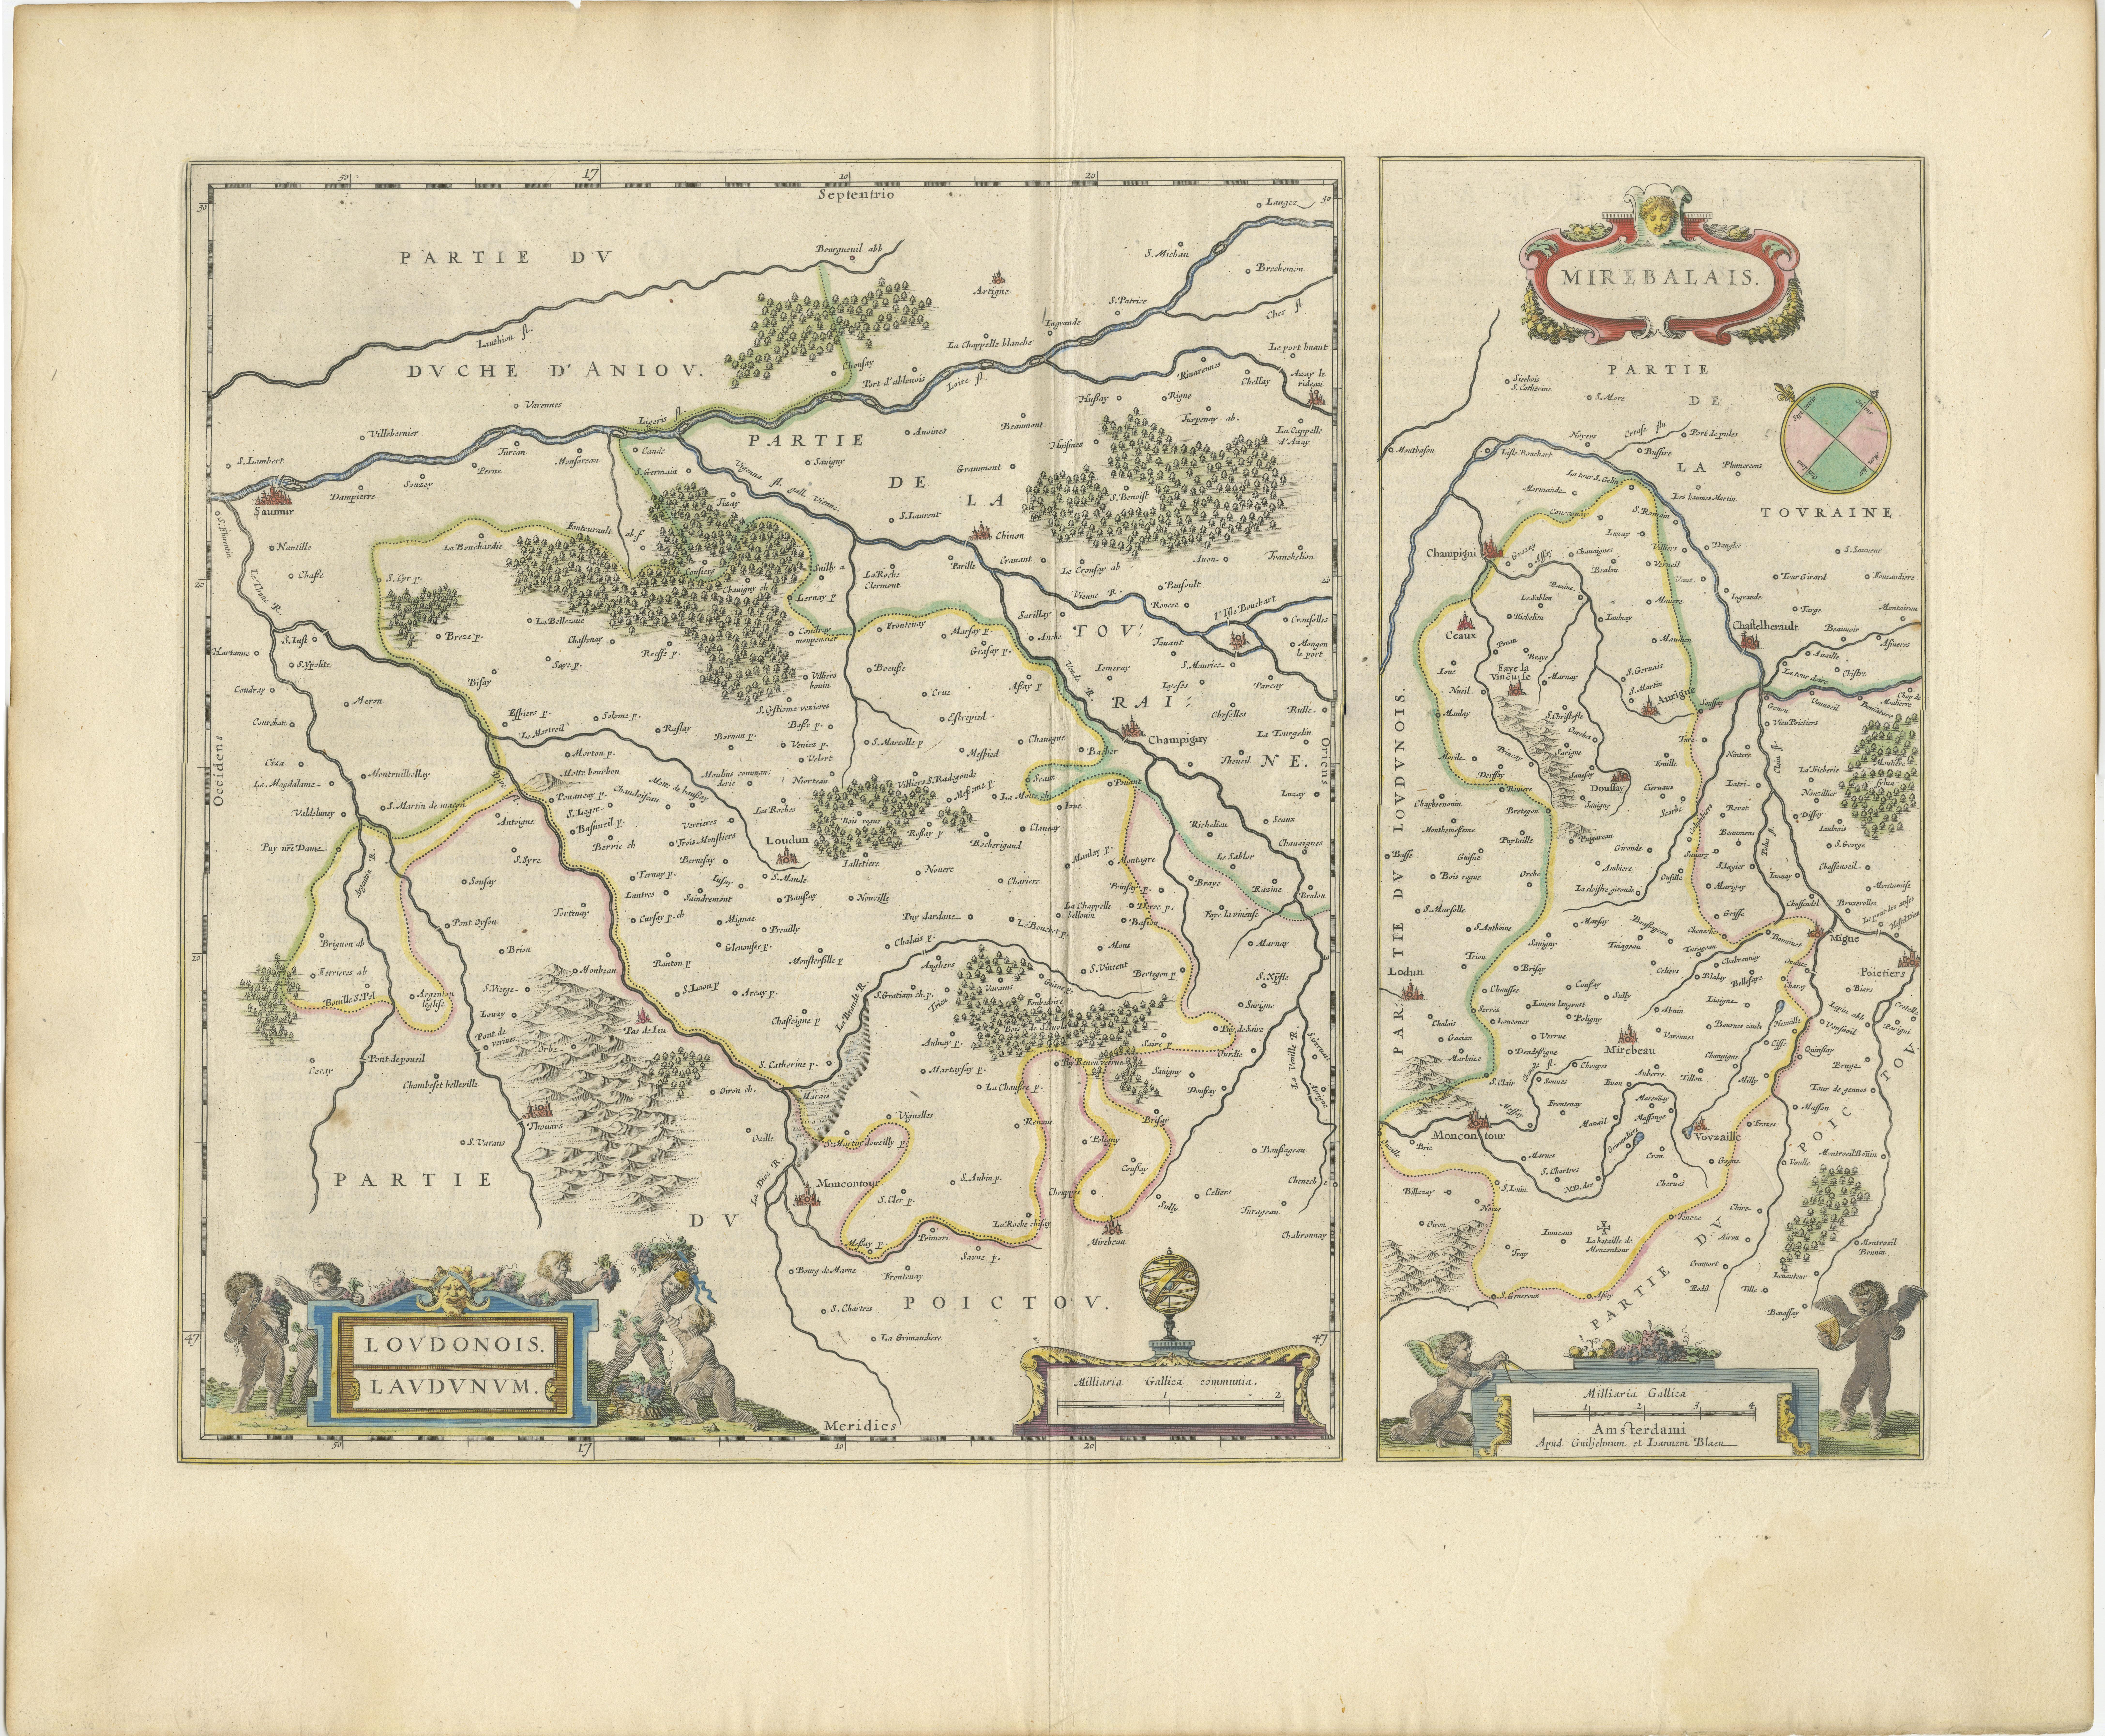 Kartographie, 17. Jahrhundert. Willem (1571-1638) und Joan Blaeu (1596-1673), Theatrum Orbis Terrarum sive Atlas Novus..., 1635. Abbildung: Loudonois. Laudunum (Loudun); Mirebalais (Mirebeau)

Das hochgeladene Bild ist ein  originale antike Karte